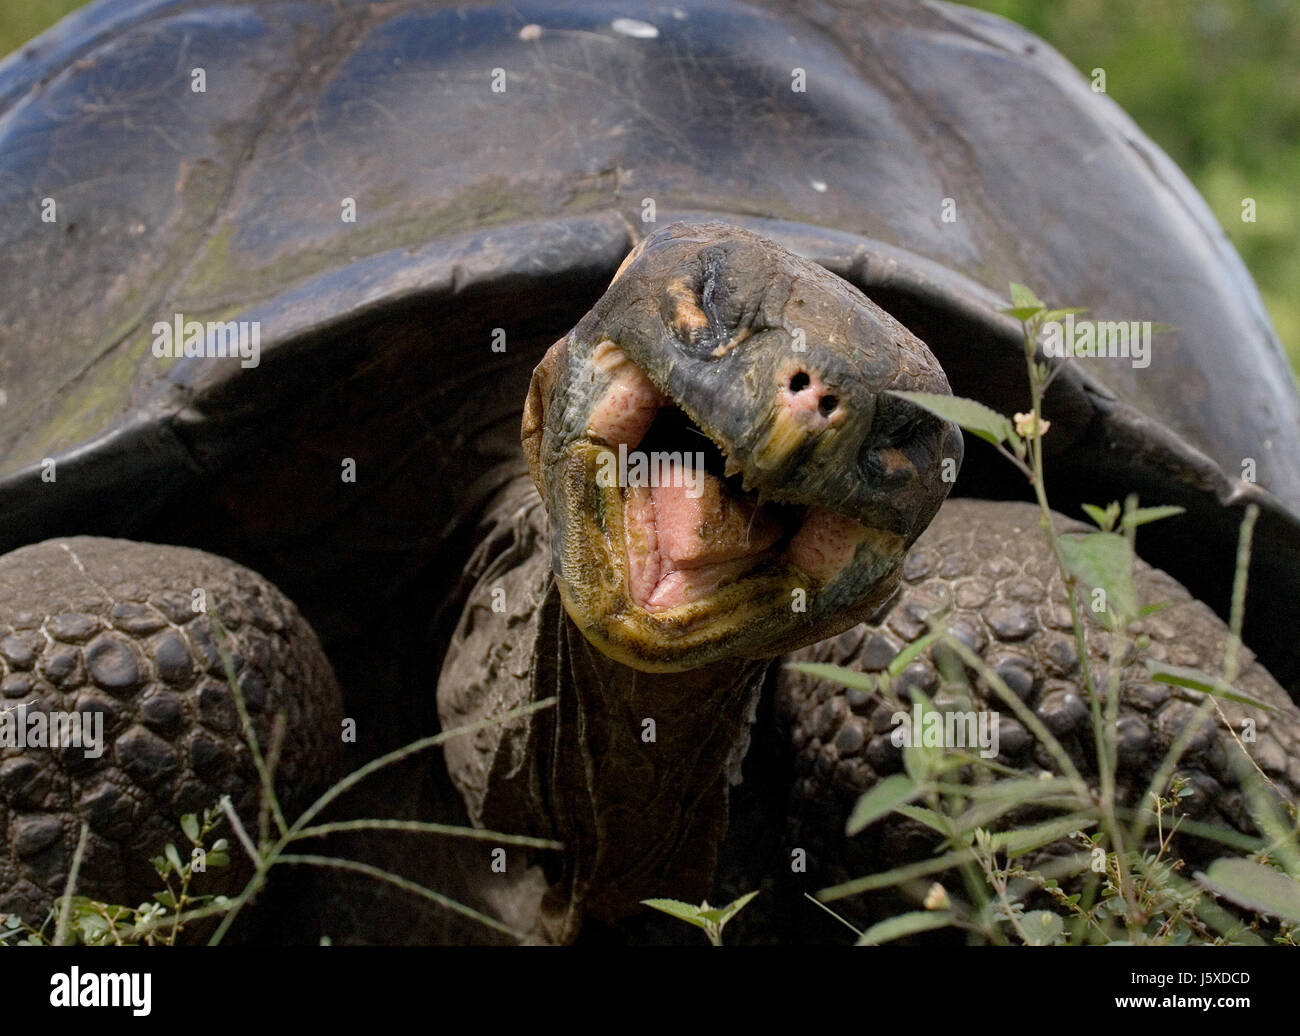 Portrait of giant tortoises. The Galapagos Islands. Pacific Ocean. Ecuador. Stock Photo